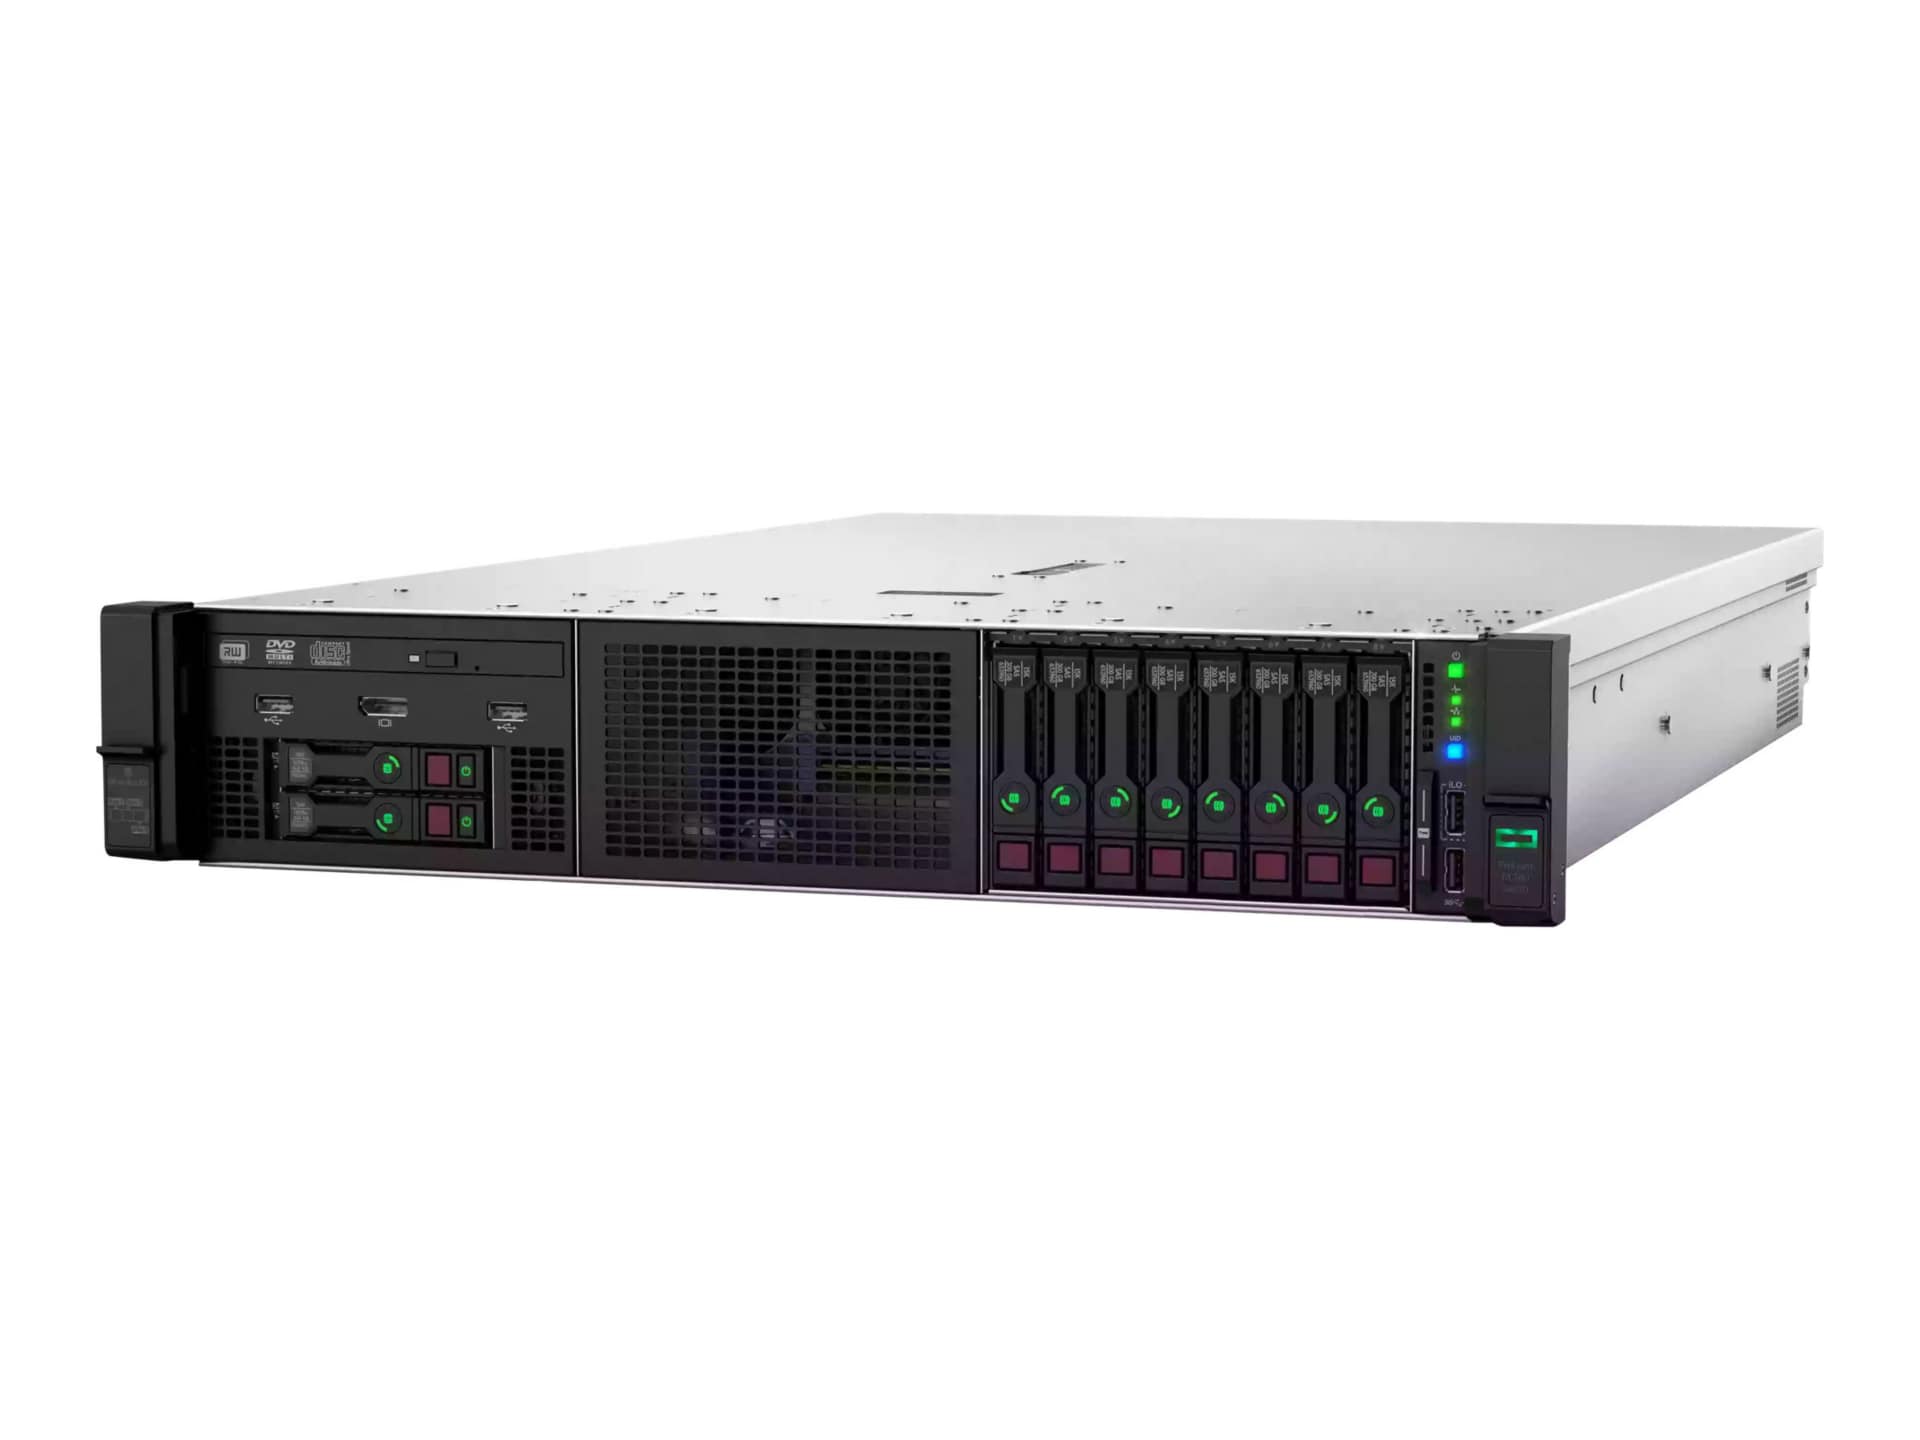 HPE ProLiant DL380 Gen10 Network Choice - rack-mountable - Xeon Gold 6248R